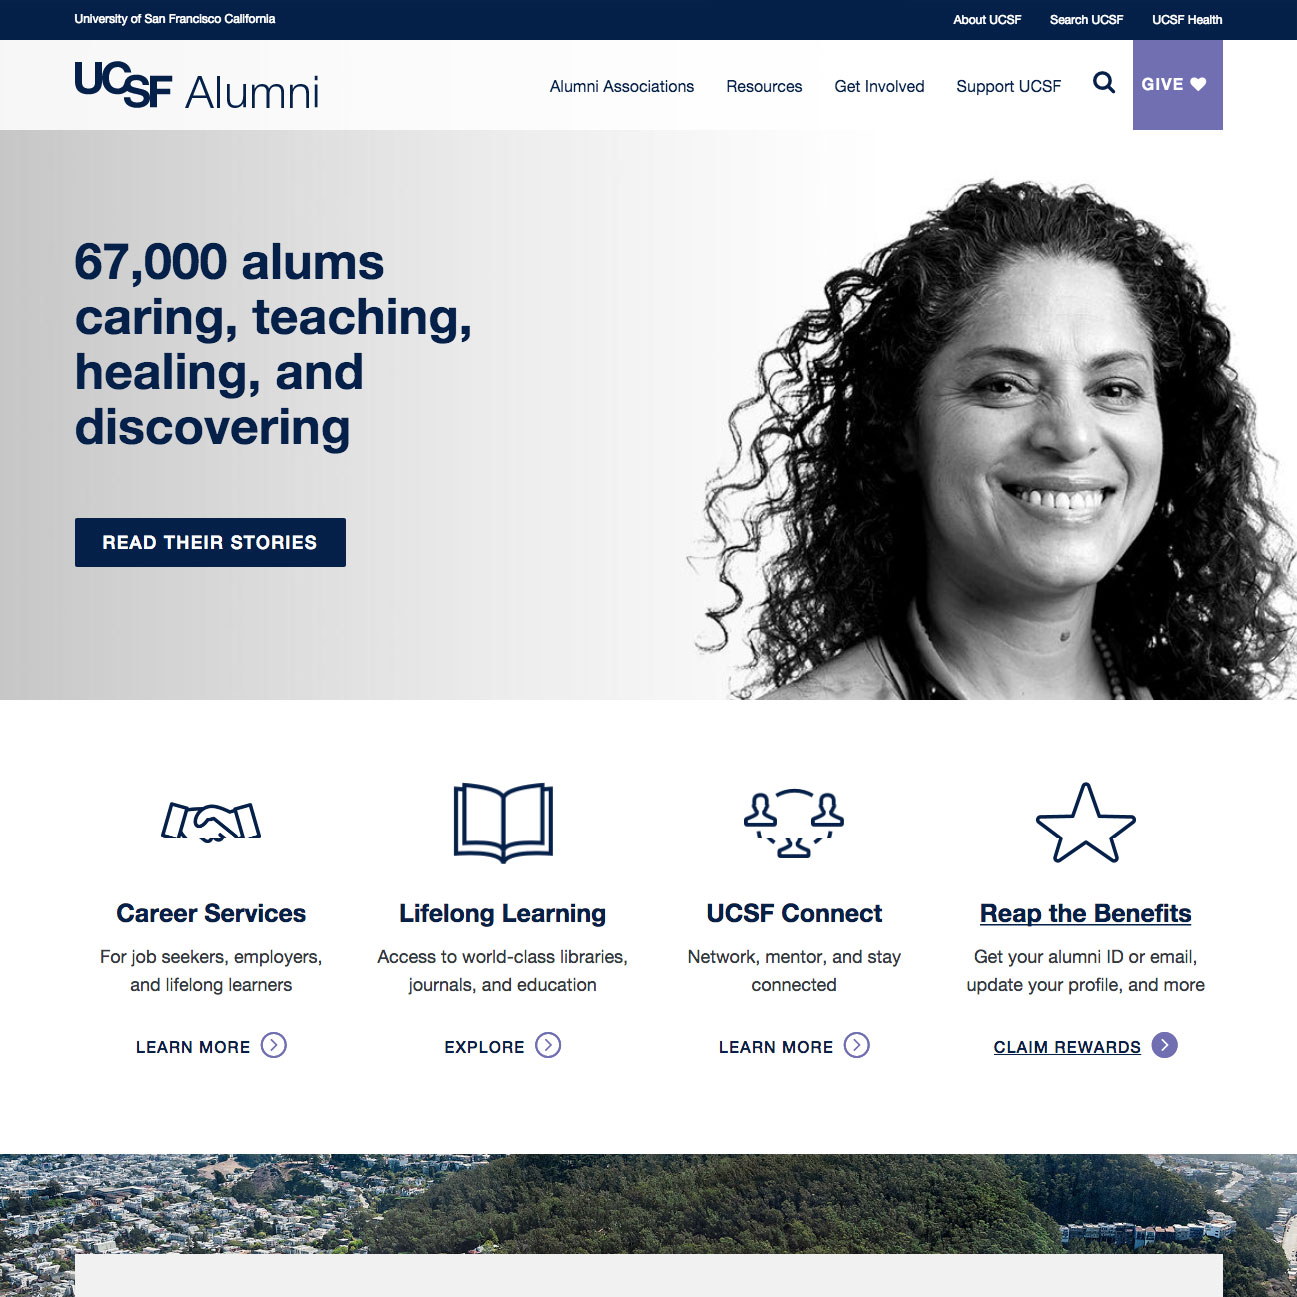 UCSF Alumni homepage screenshot